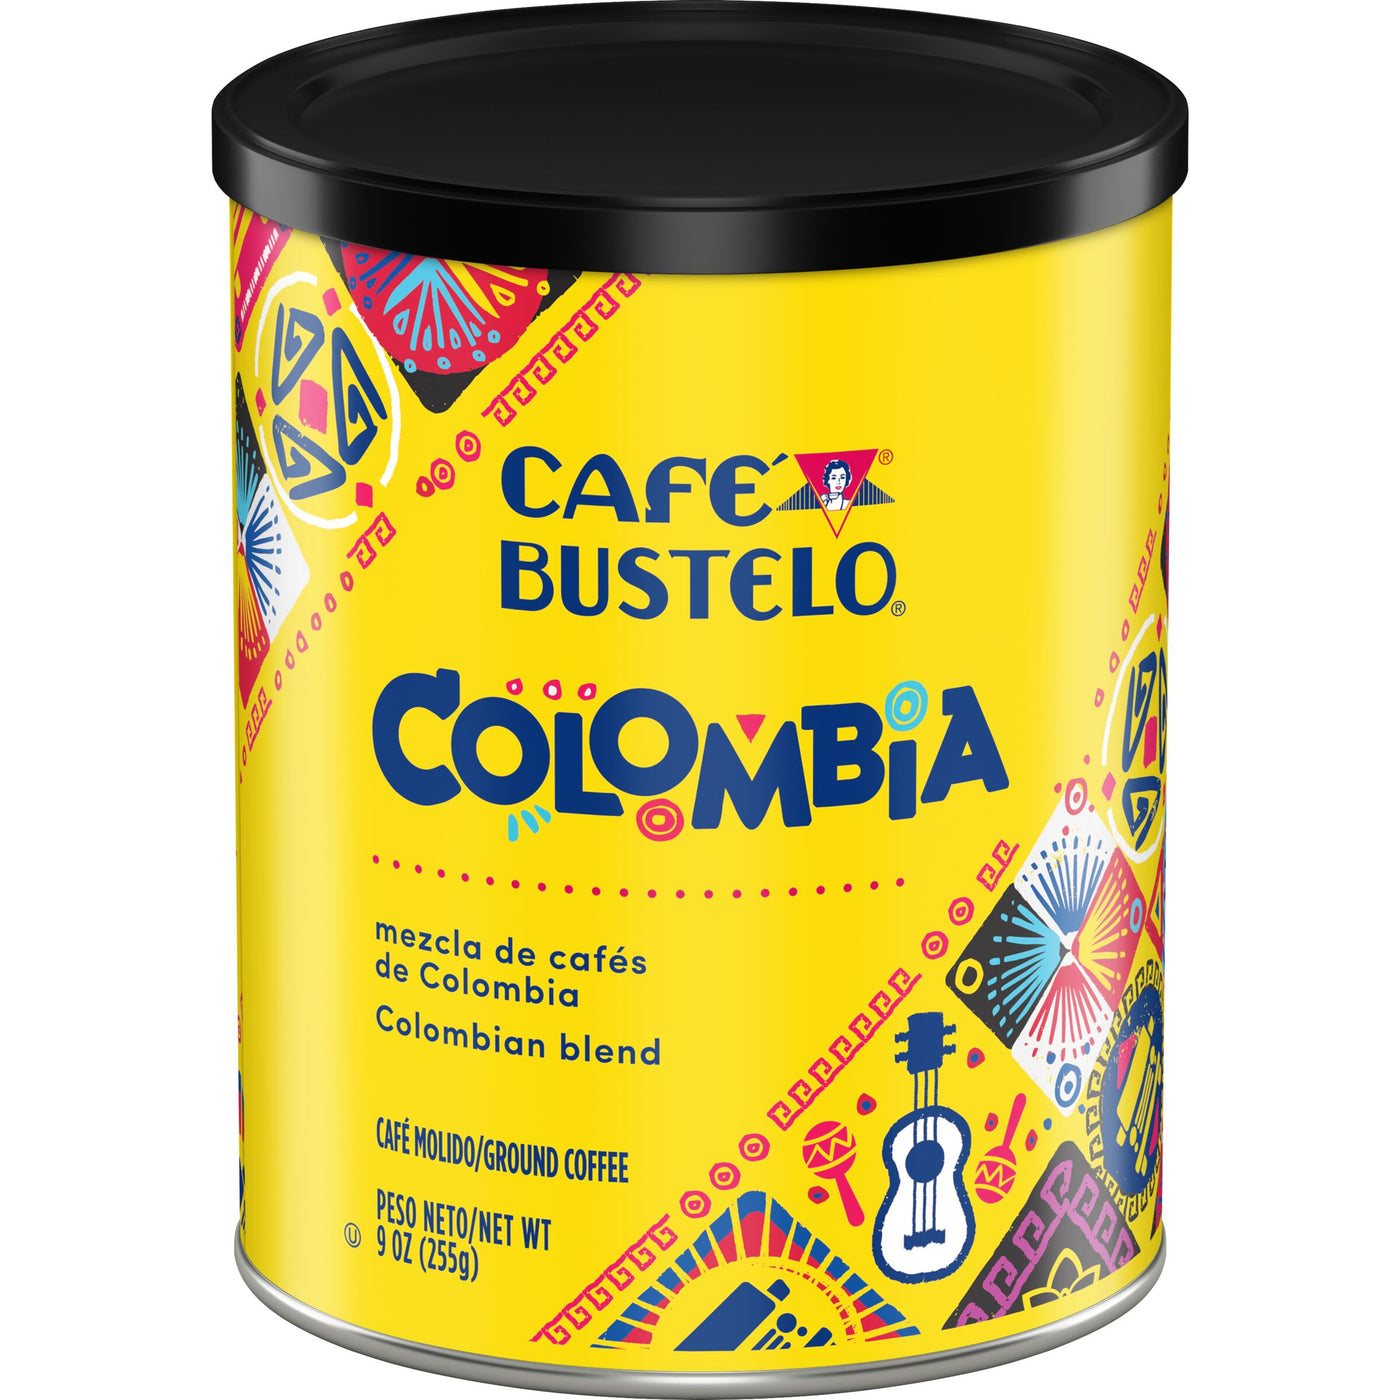 Cafe Bustelo Origins Colombia Medium Roast, Ground Coffee Can, 9 oz